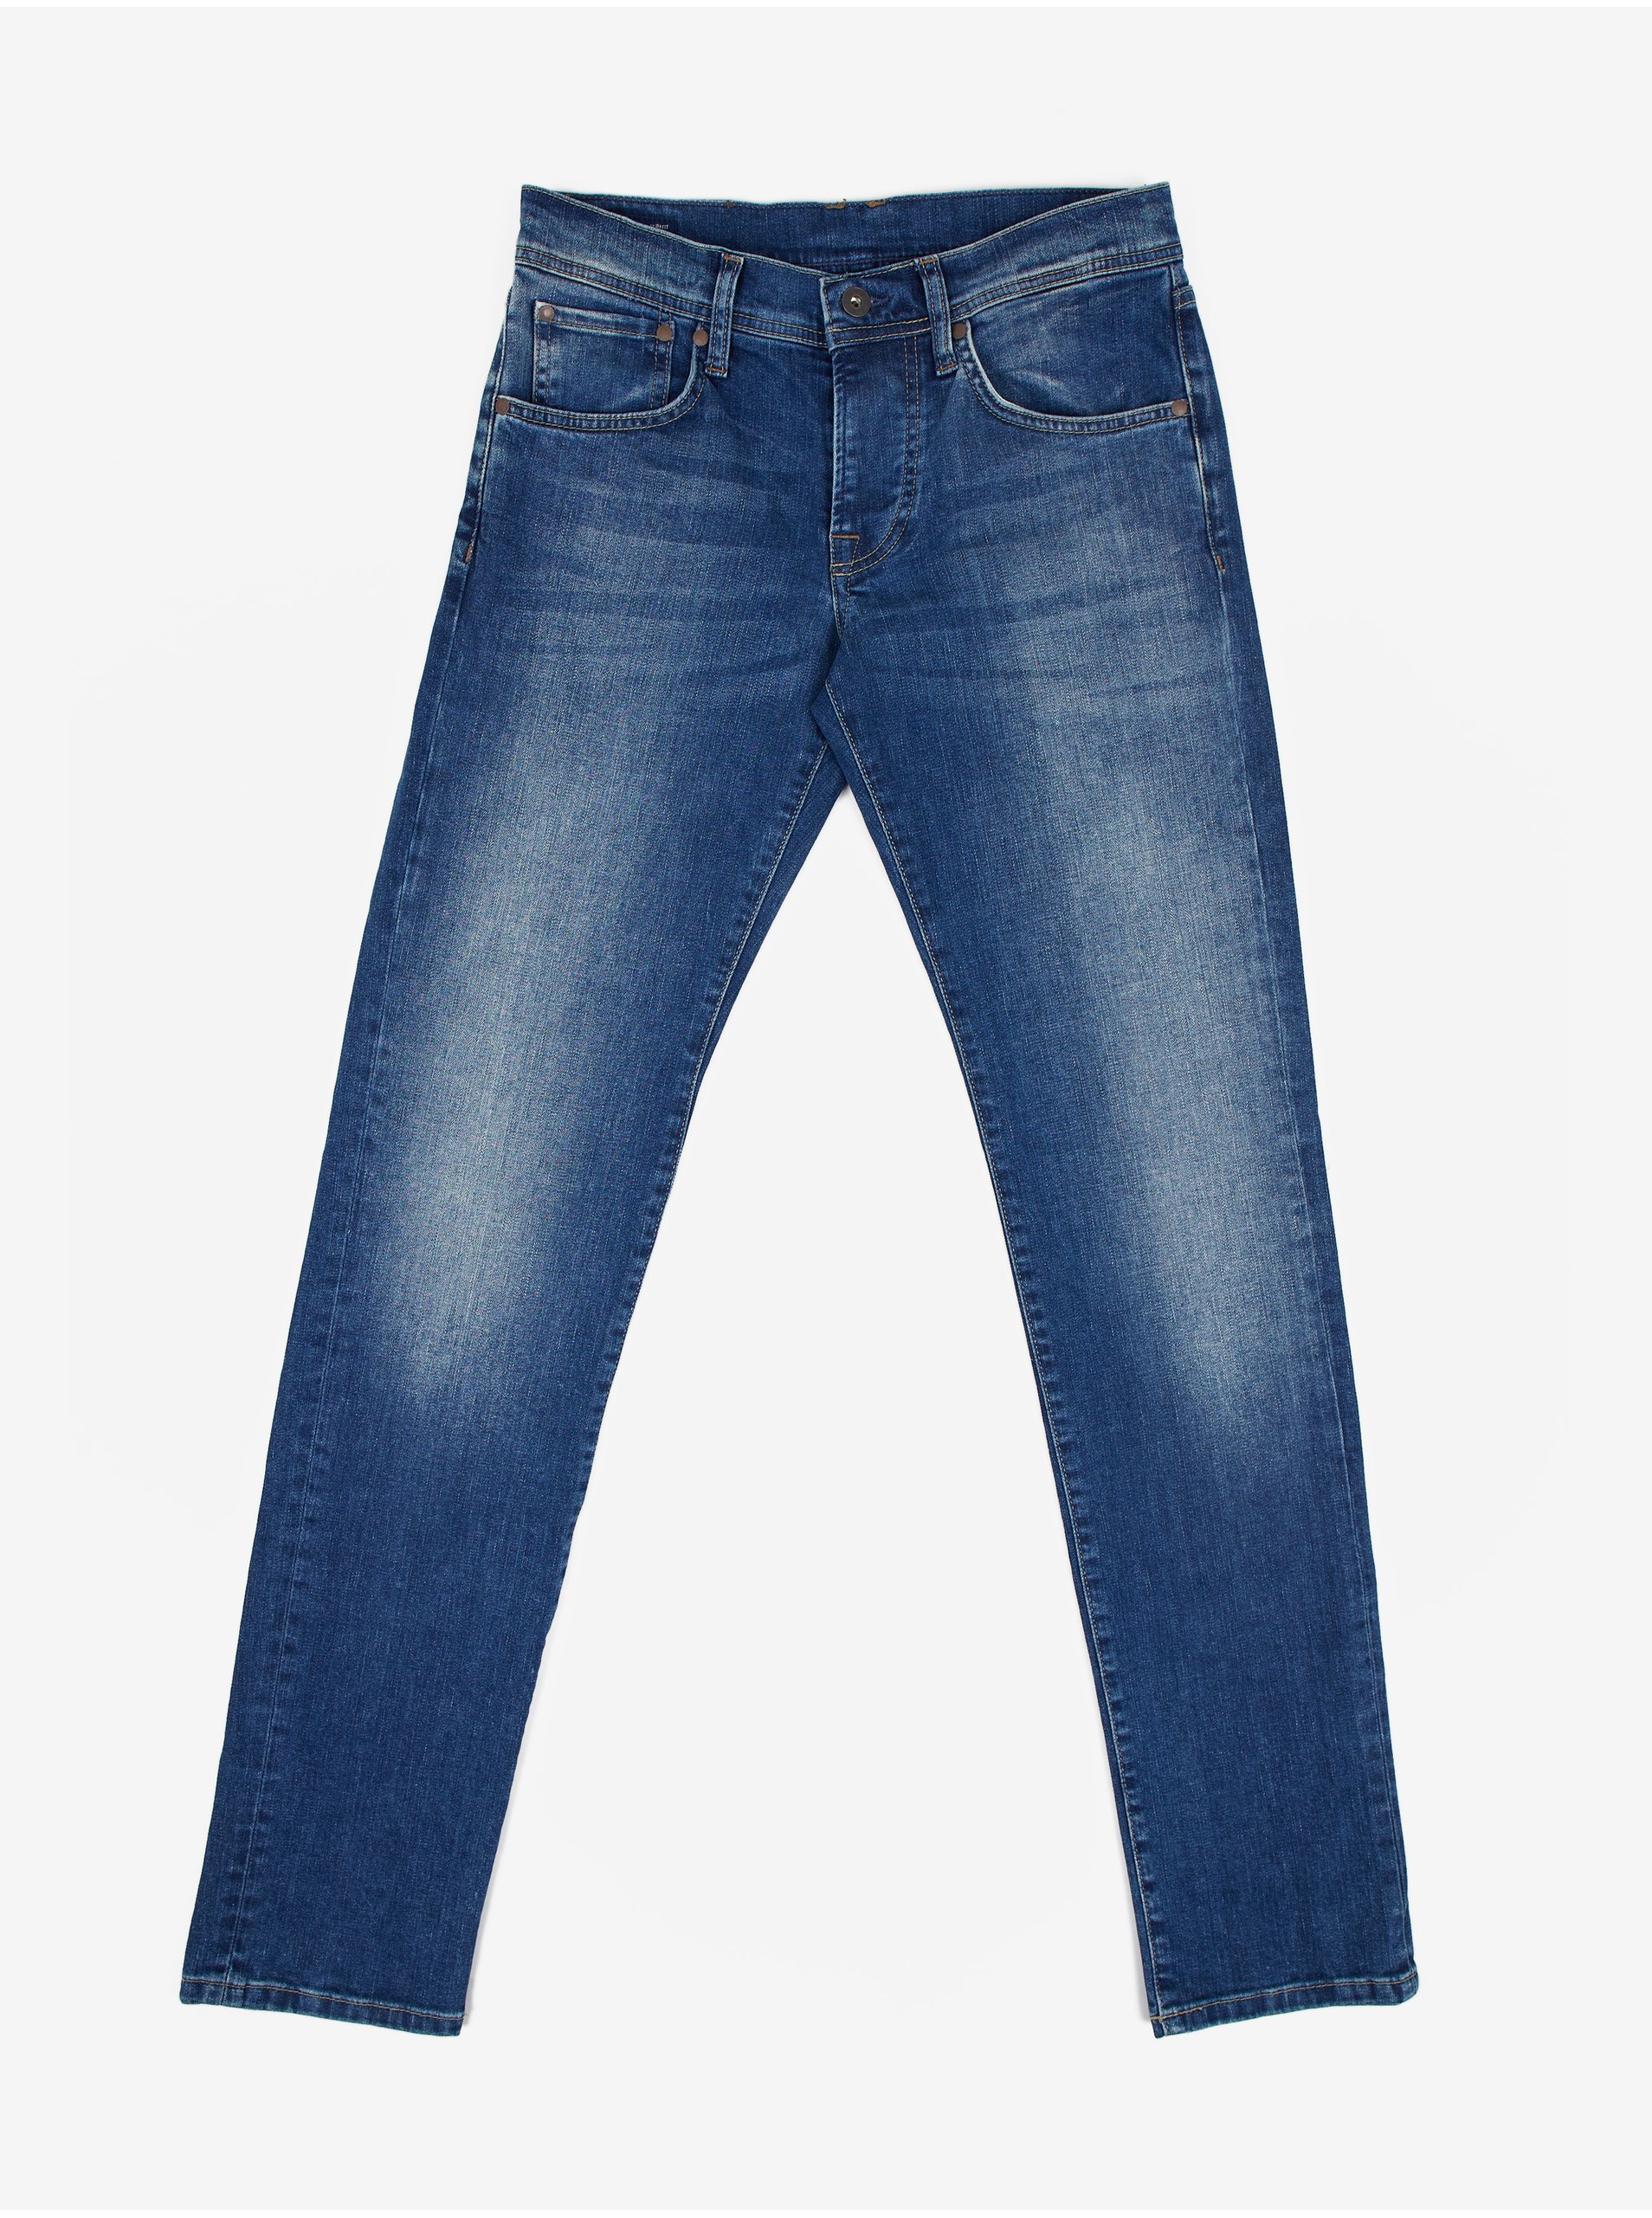 Dark blue men's slim fit jeans Pepe Jeans Cane - Men